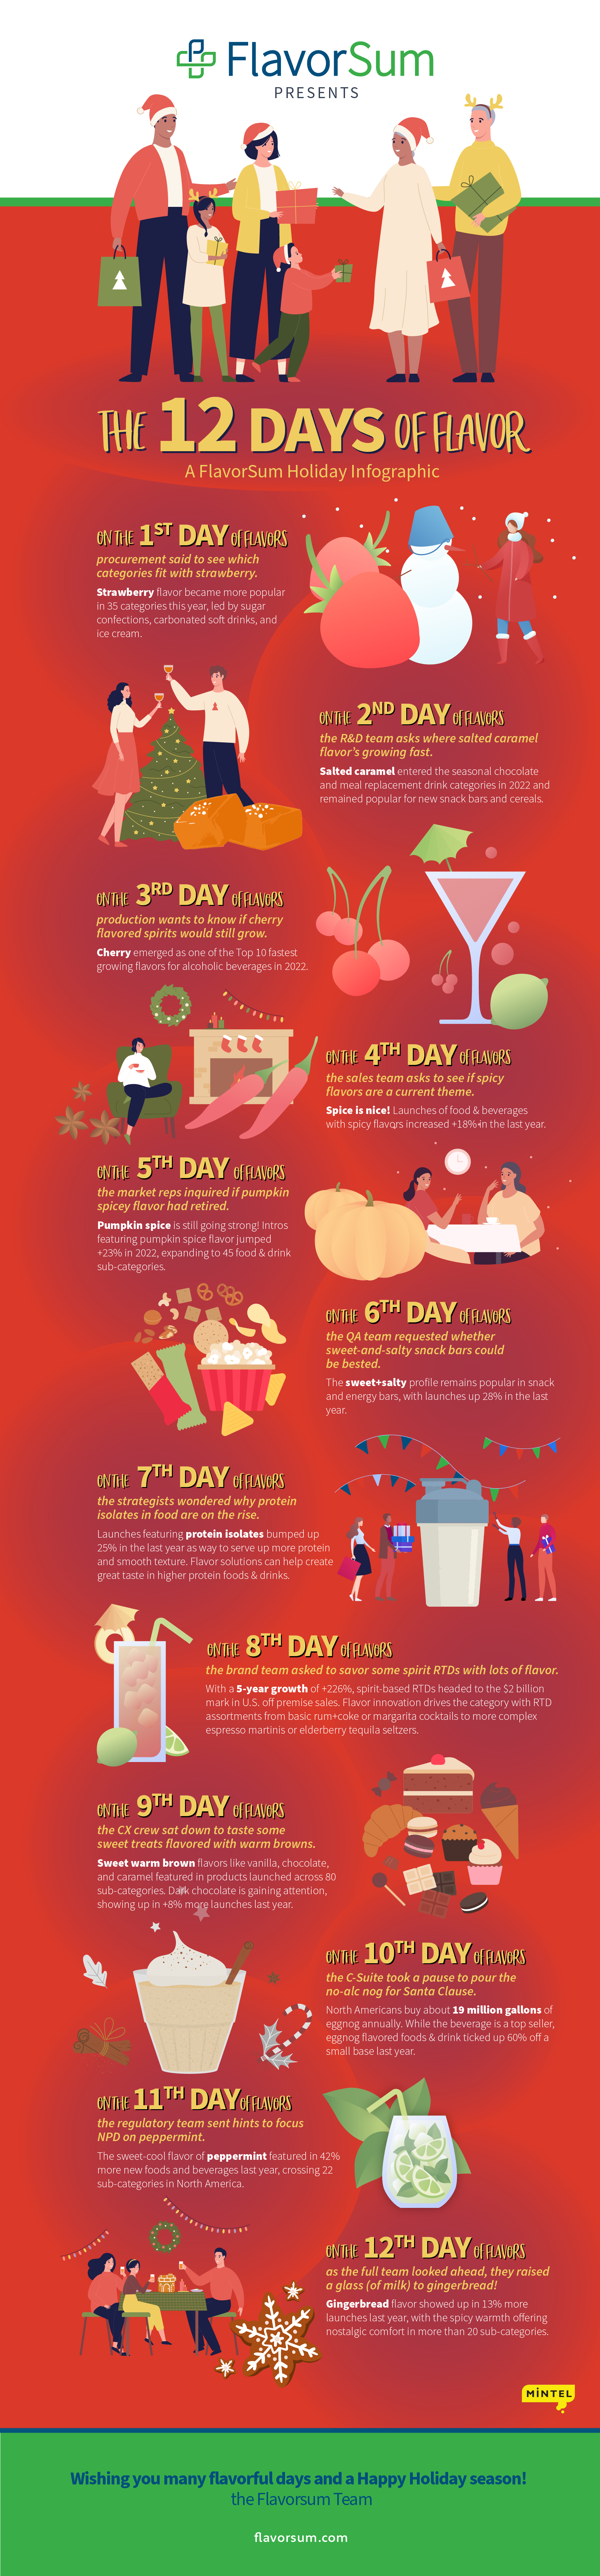 FlavorSum Holiday Infographic